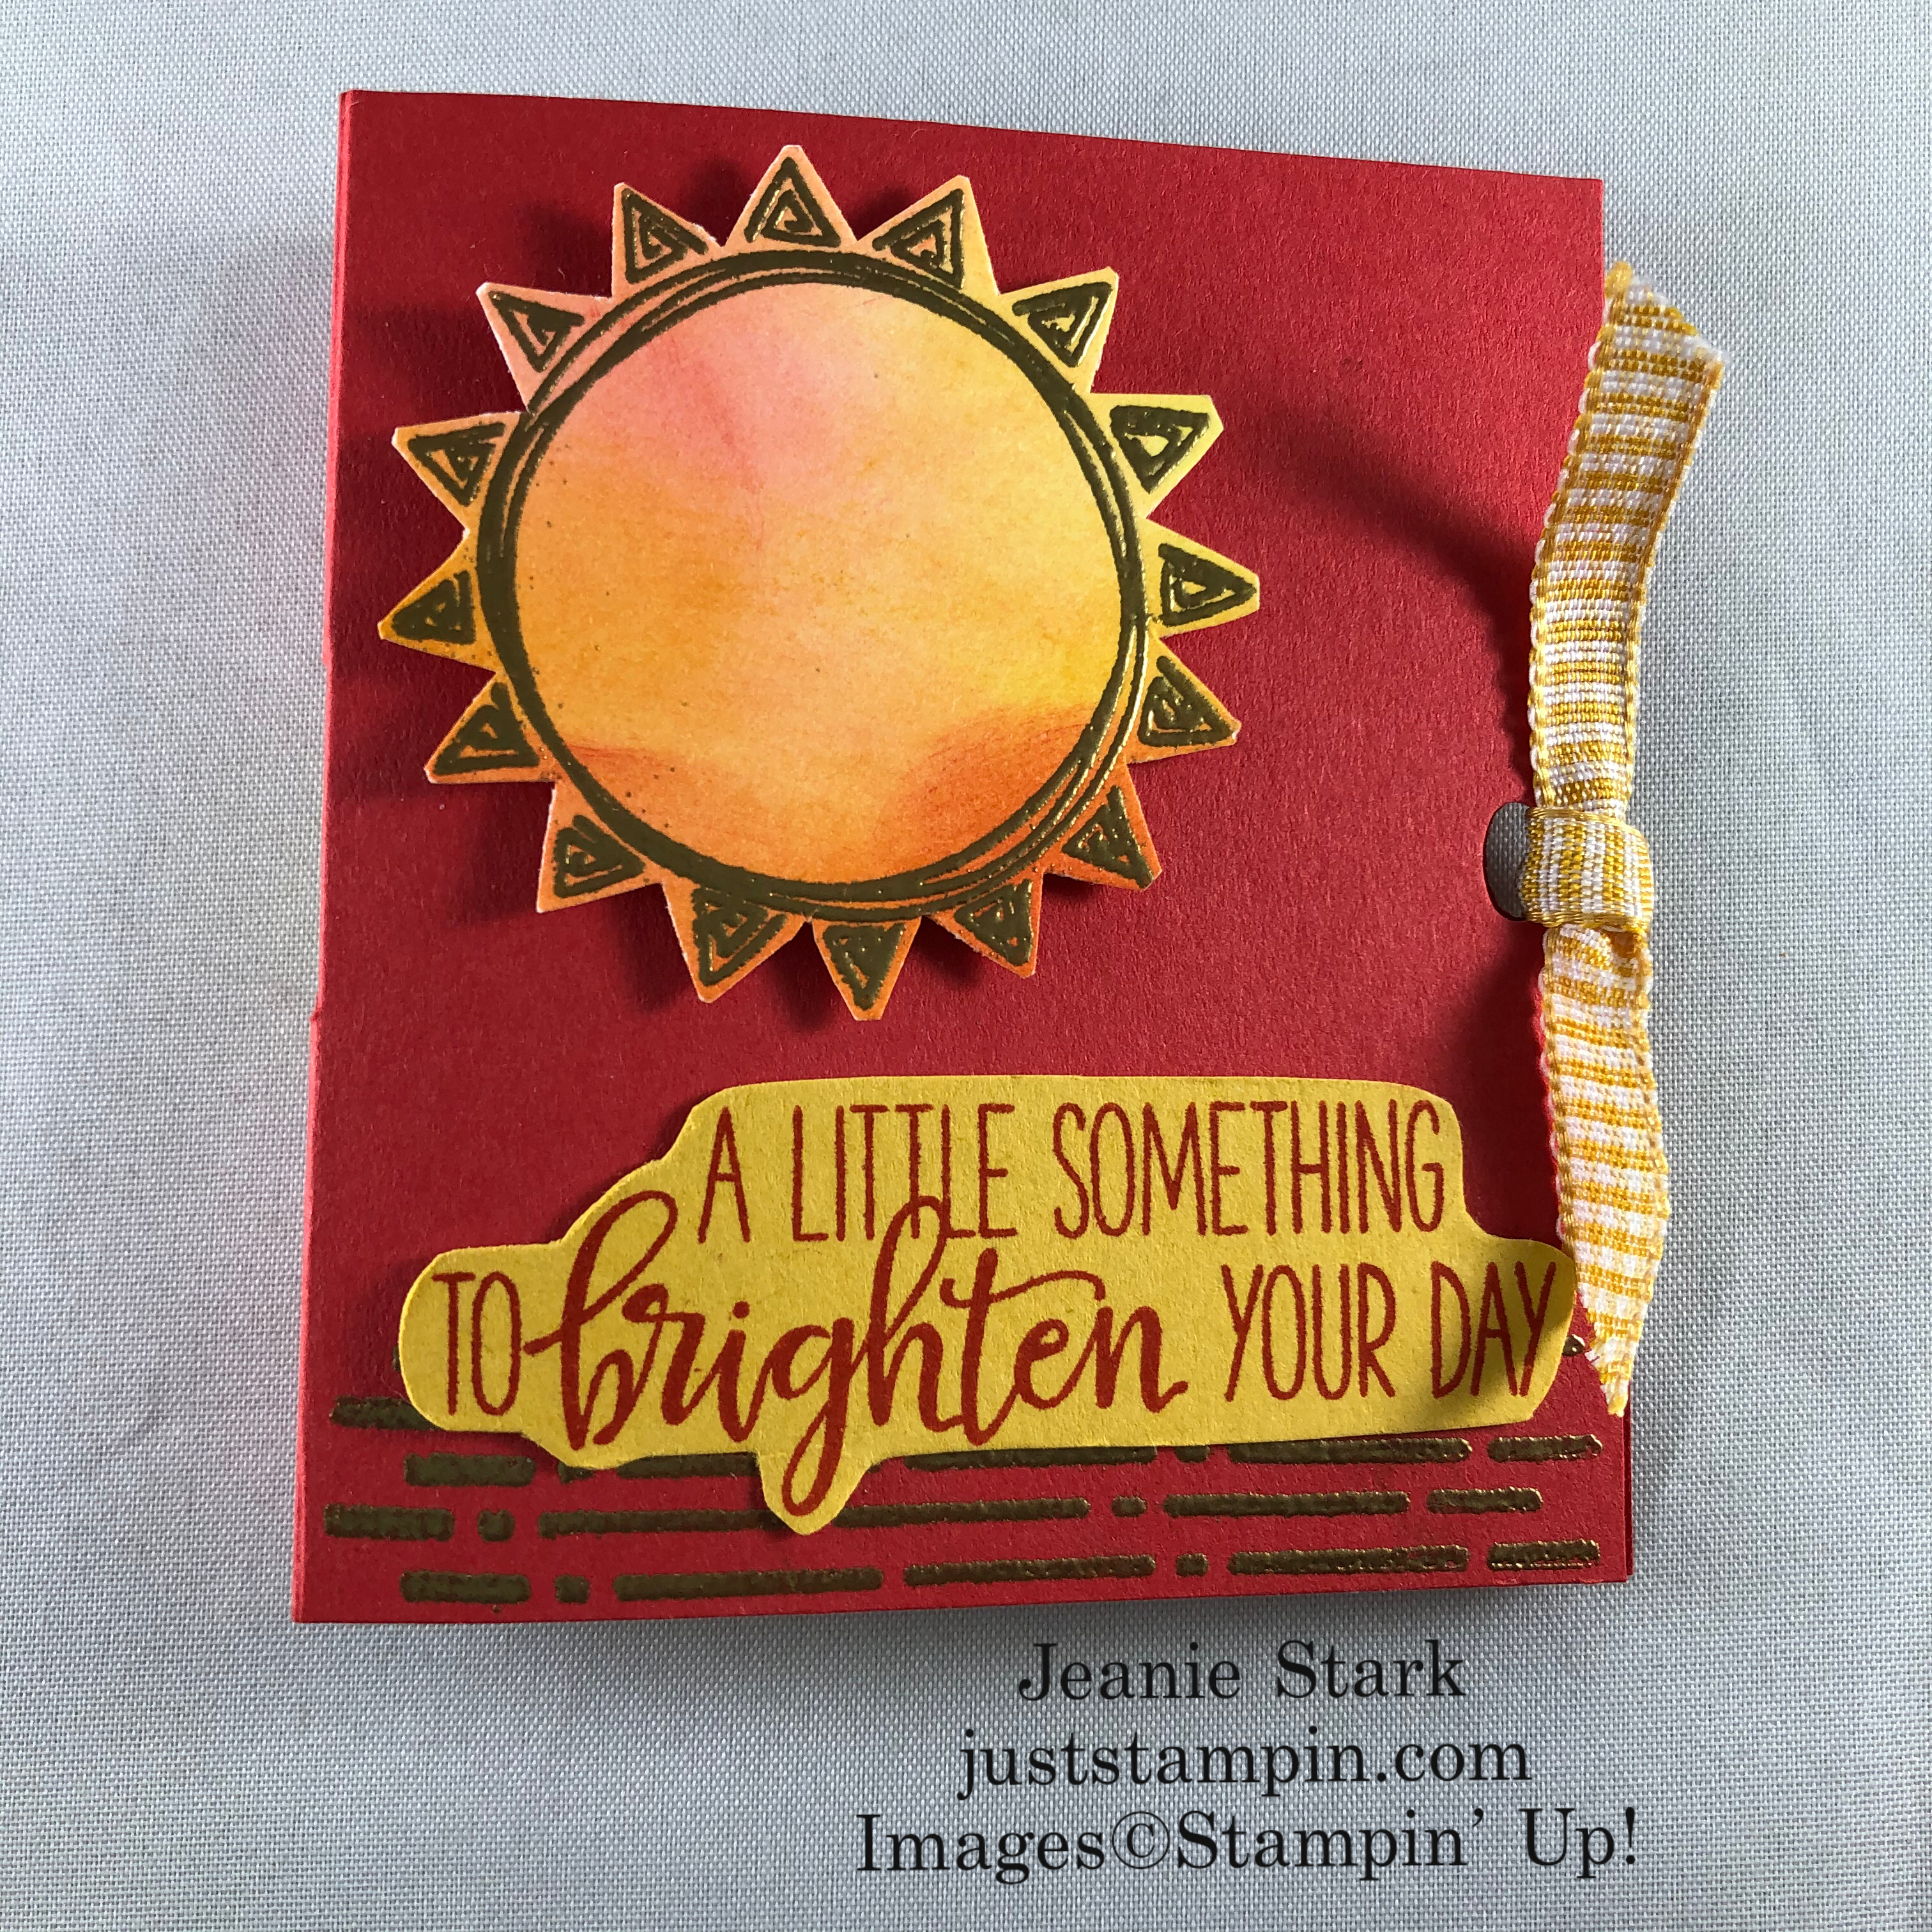 Stampin' Up! Box of Sunshine alternative idea for a lip balm holder - Jeanie Stark StampinUp